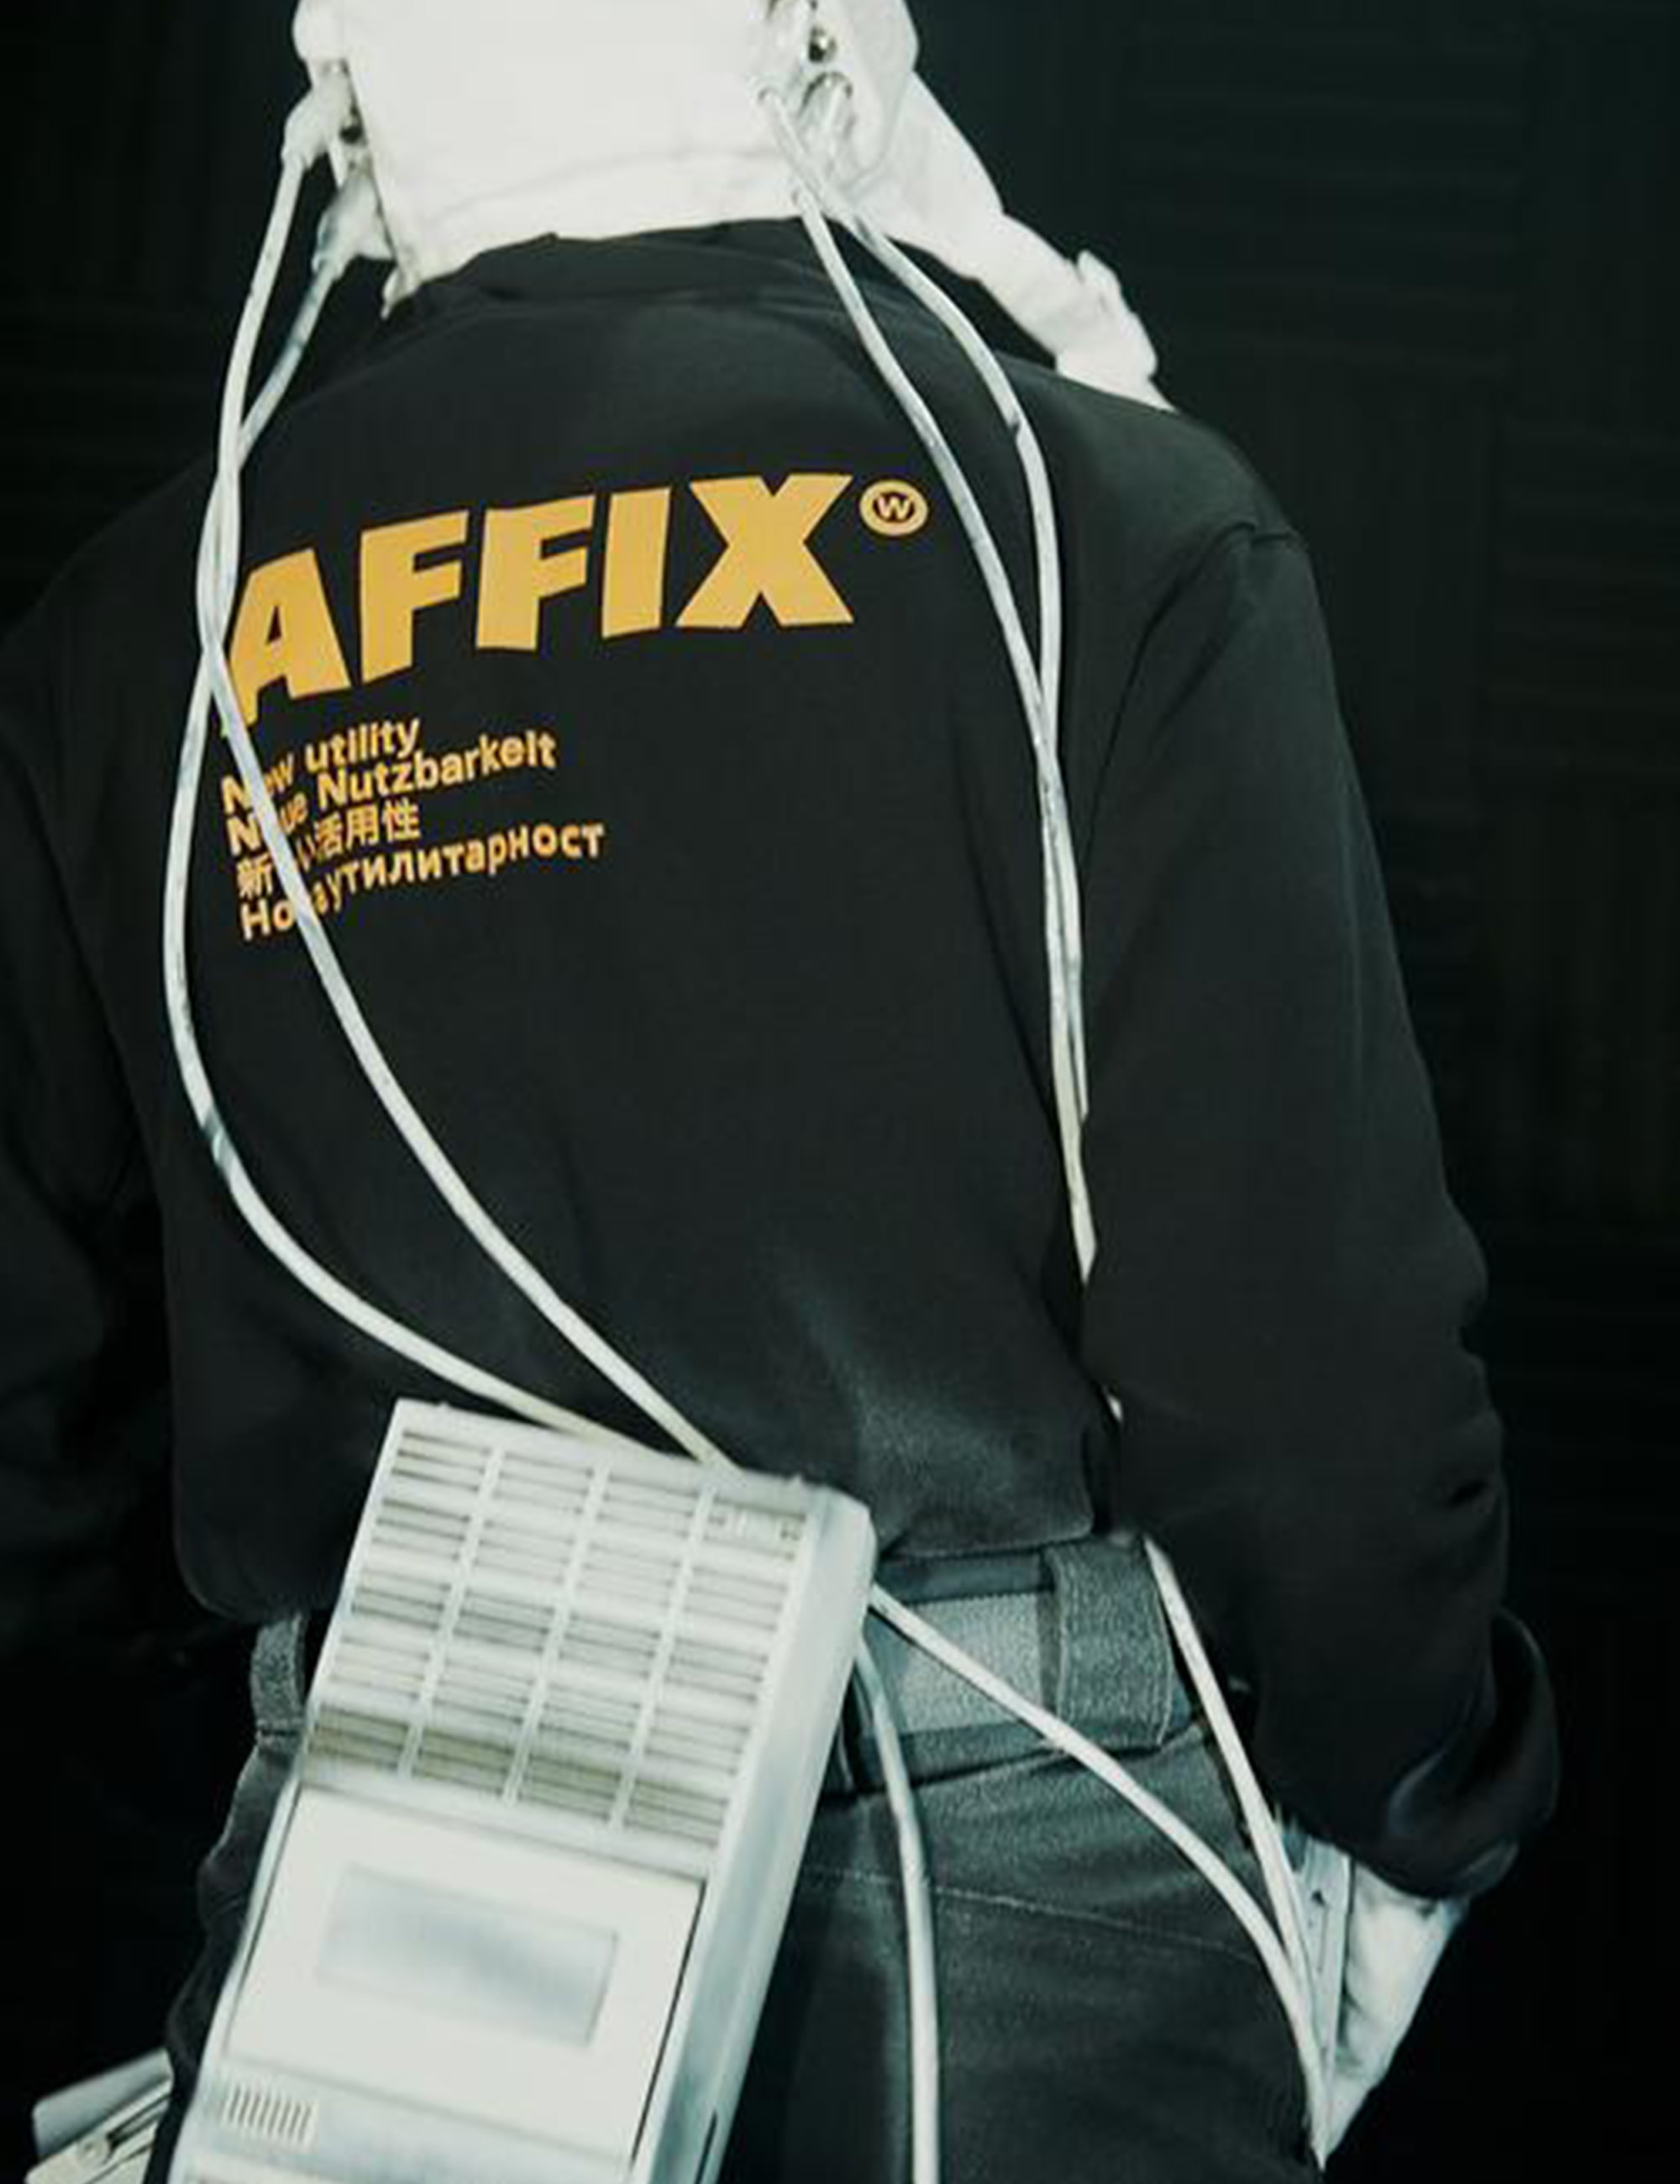 AFFIX SS21 LOOKBOOK